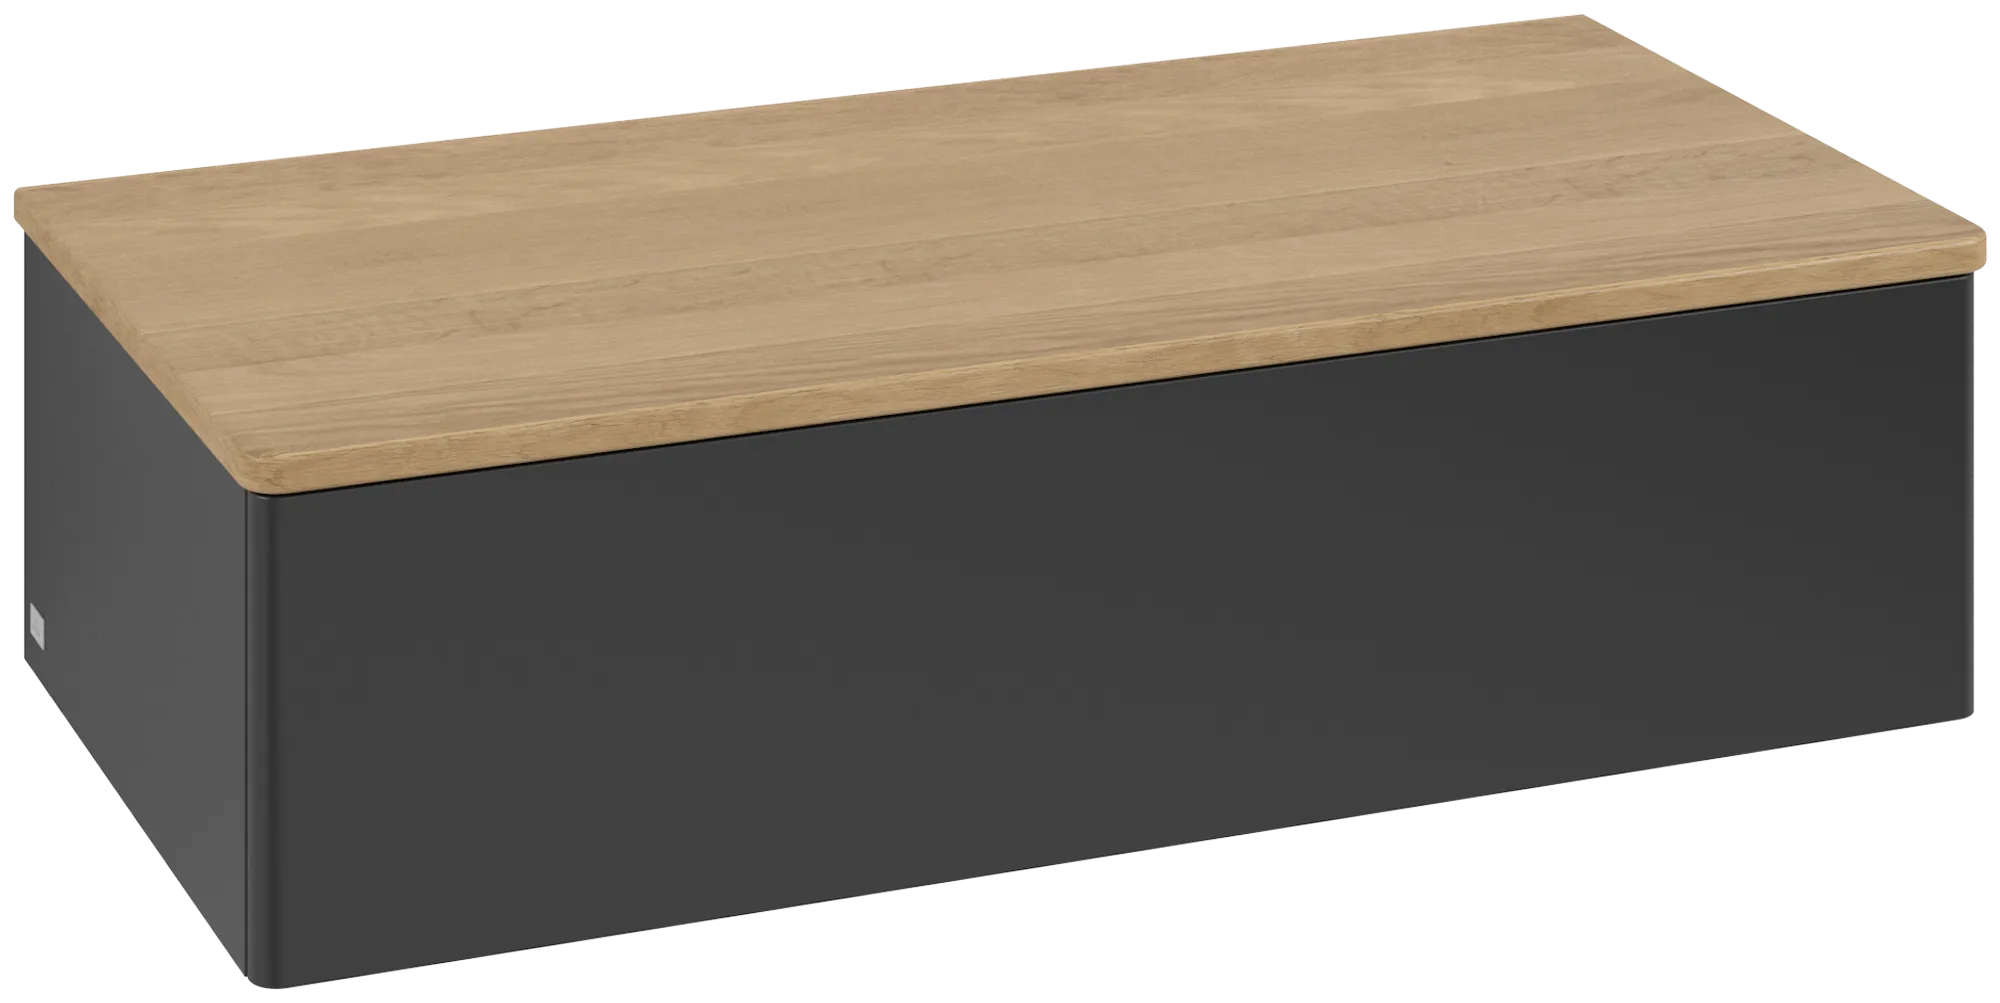 Bild von VILLEROY BOCH Antao Sideboard, 1 Auszug, 1000 x 268 x 500 mm, Front ohne Struktur, Black Matt Lacquer / Honey Oak #K40001PD